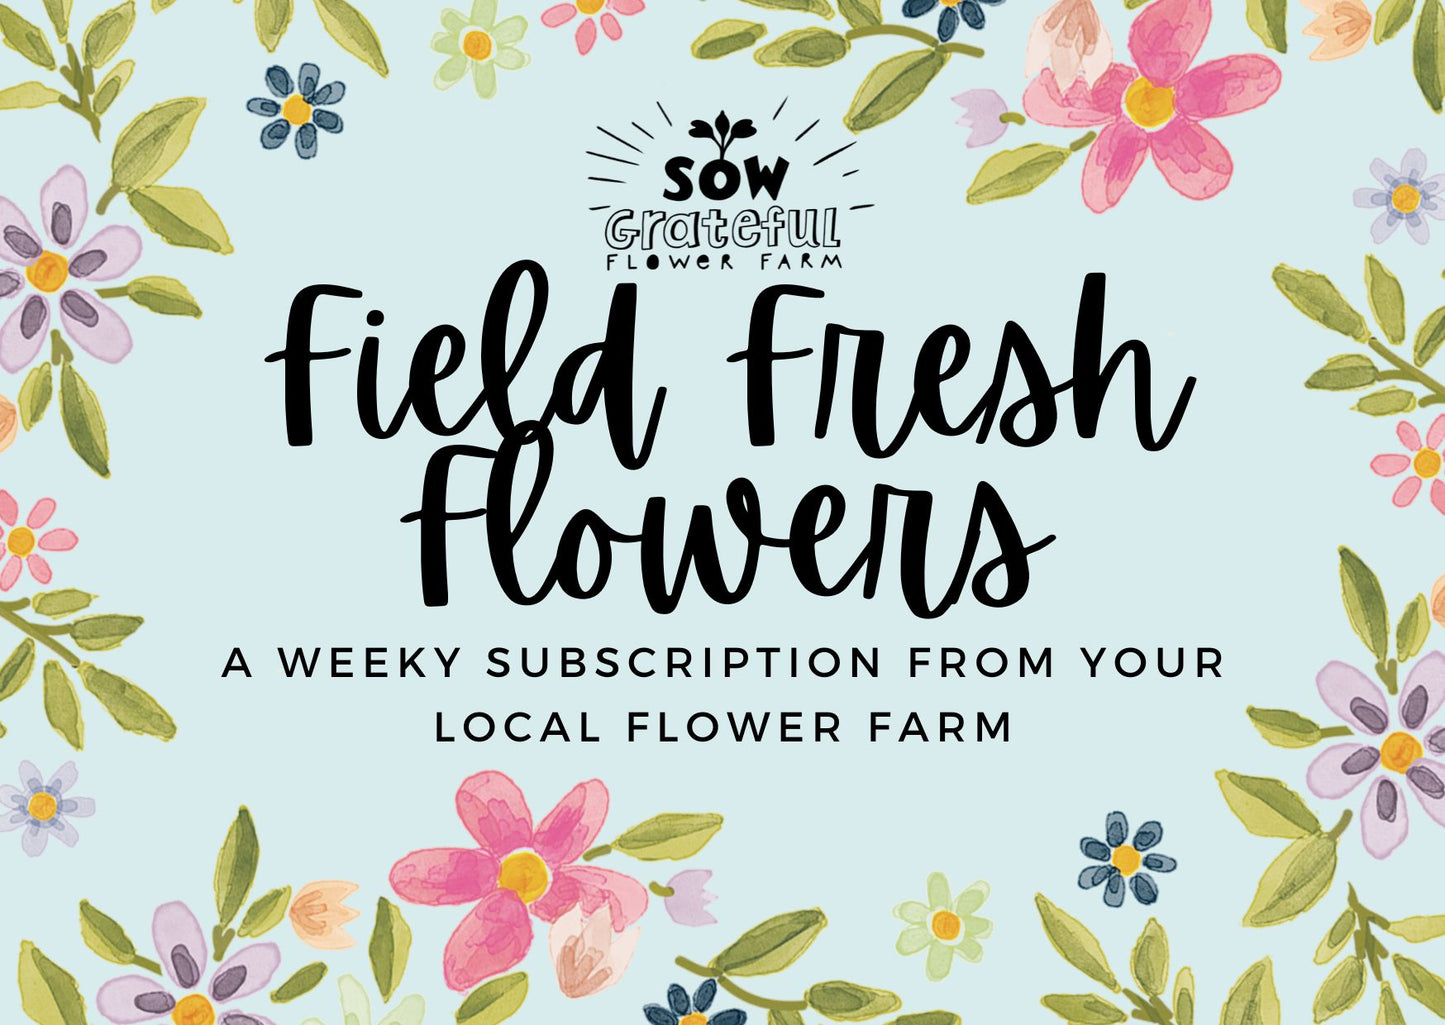 Field Fresh Flowers - Summer Weekly Subscription